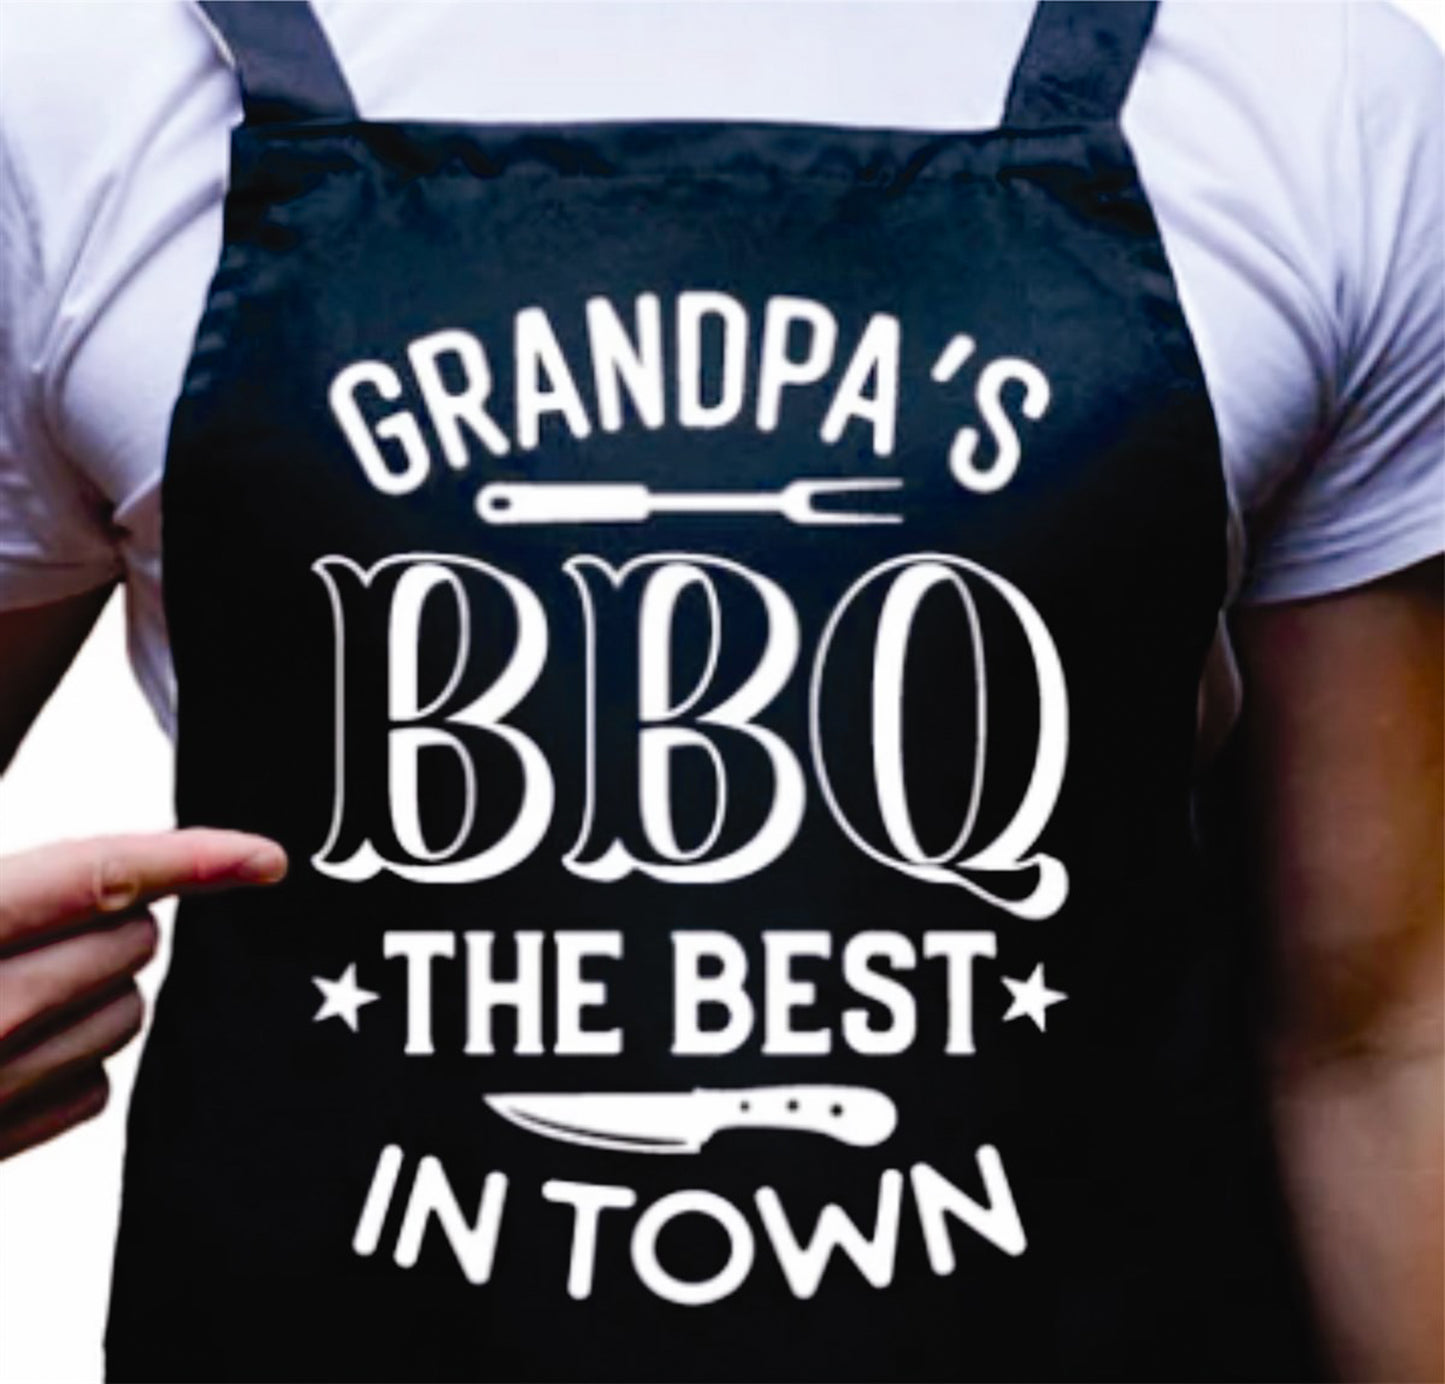 Grandpa's BBQ The Best In Town Apron